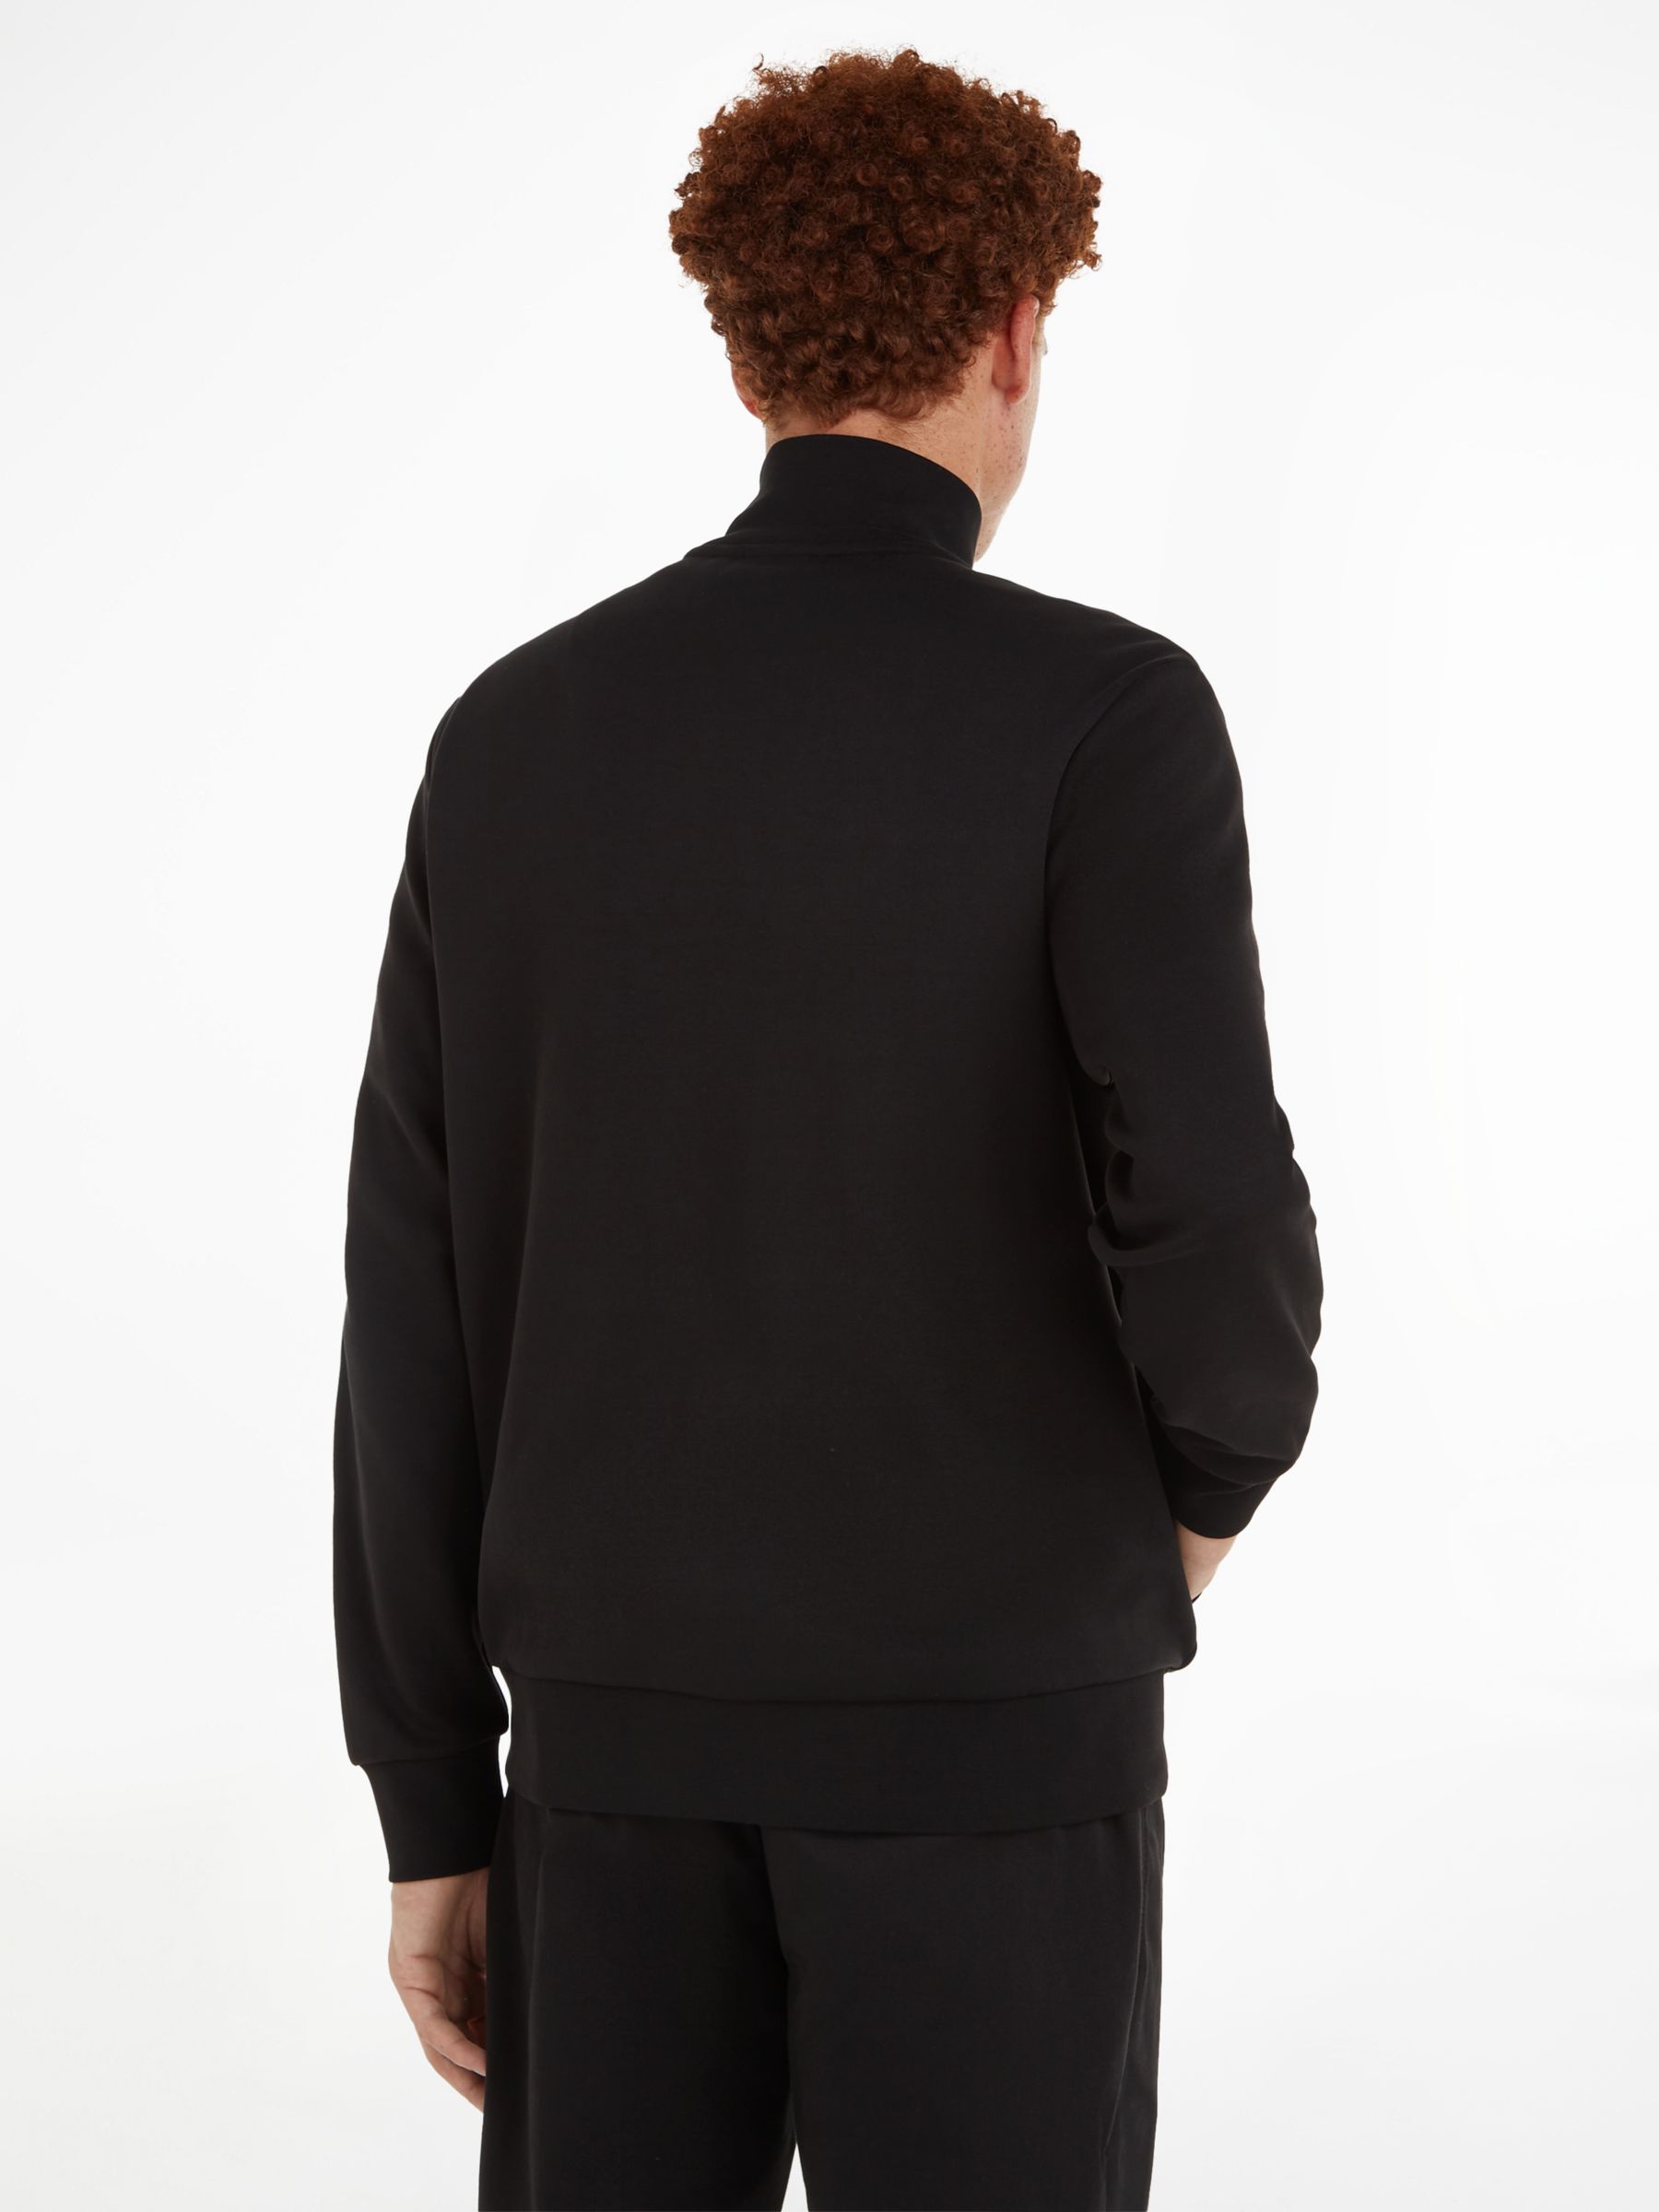 Calvin Klein Micro Half Zip Jumper, Black at John Lewis & Partners